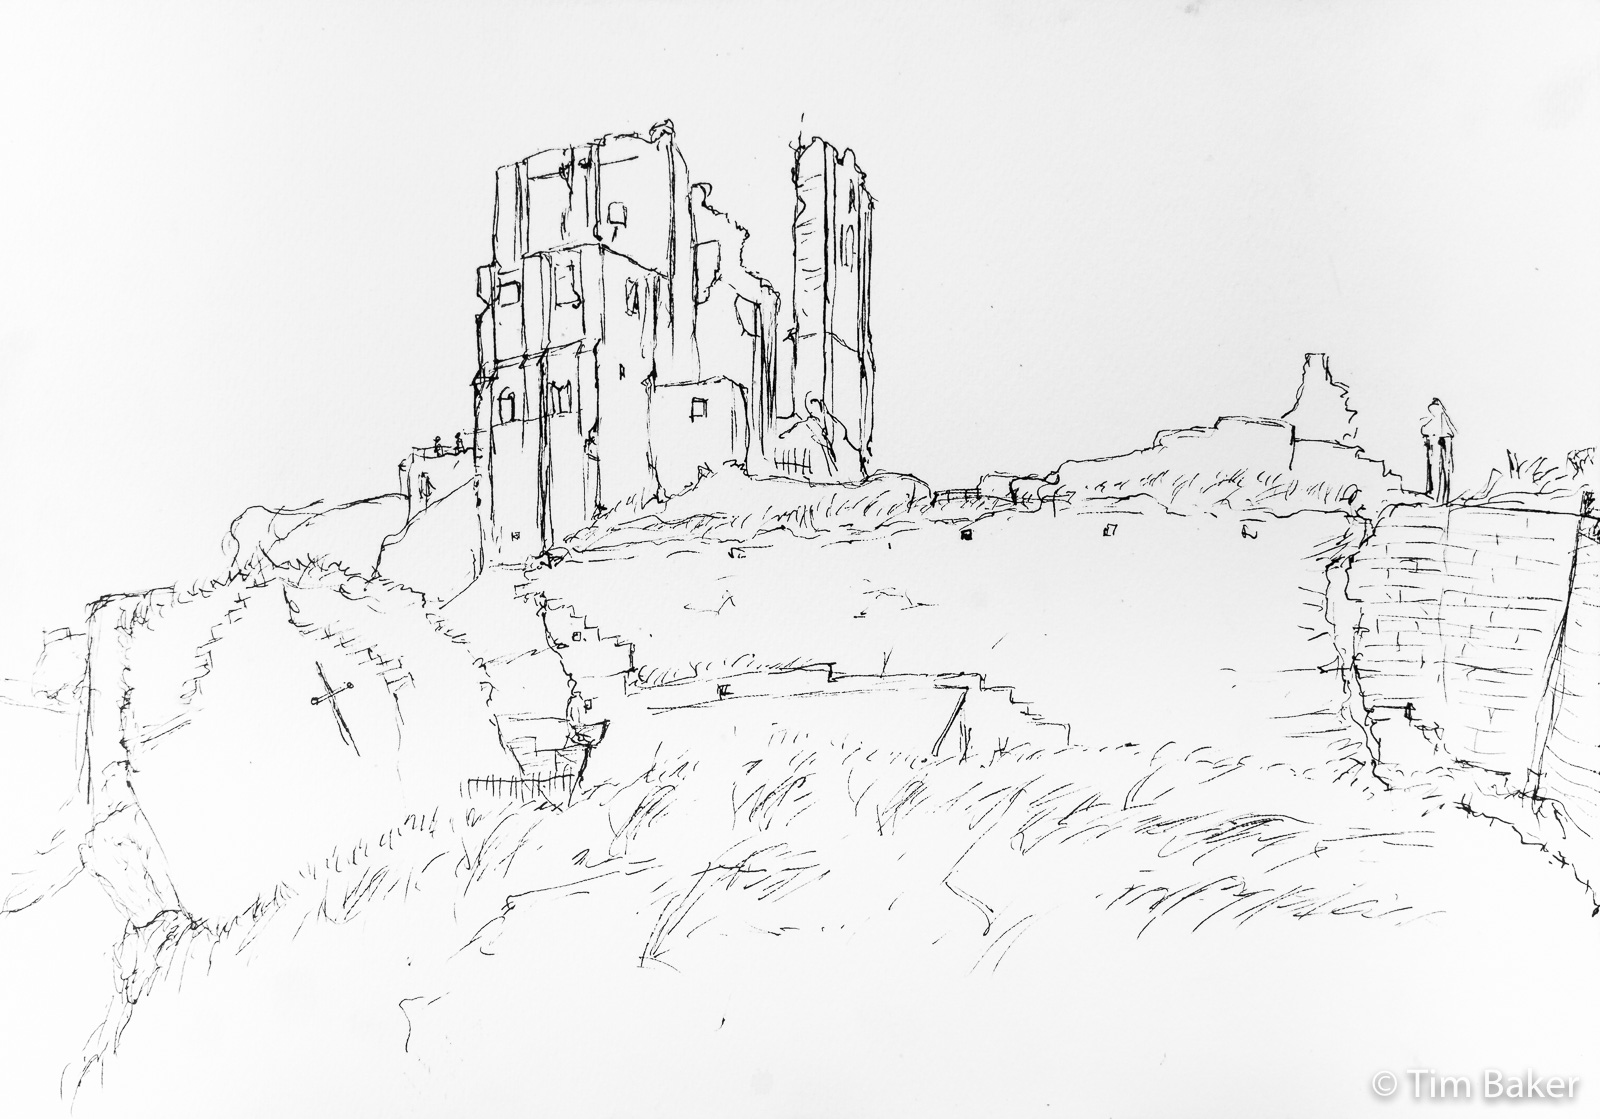 Corfe Castle (Tea Room), in progress drawing, foutain pen on Fabriano Paper. 